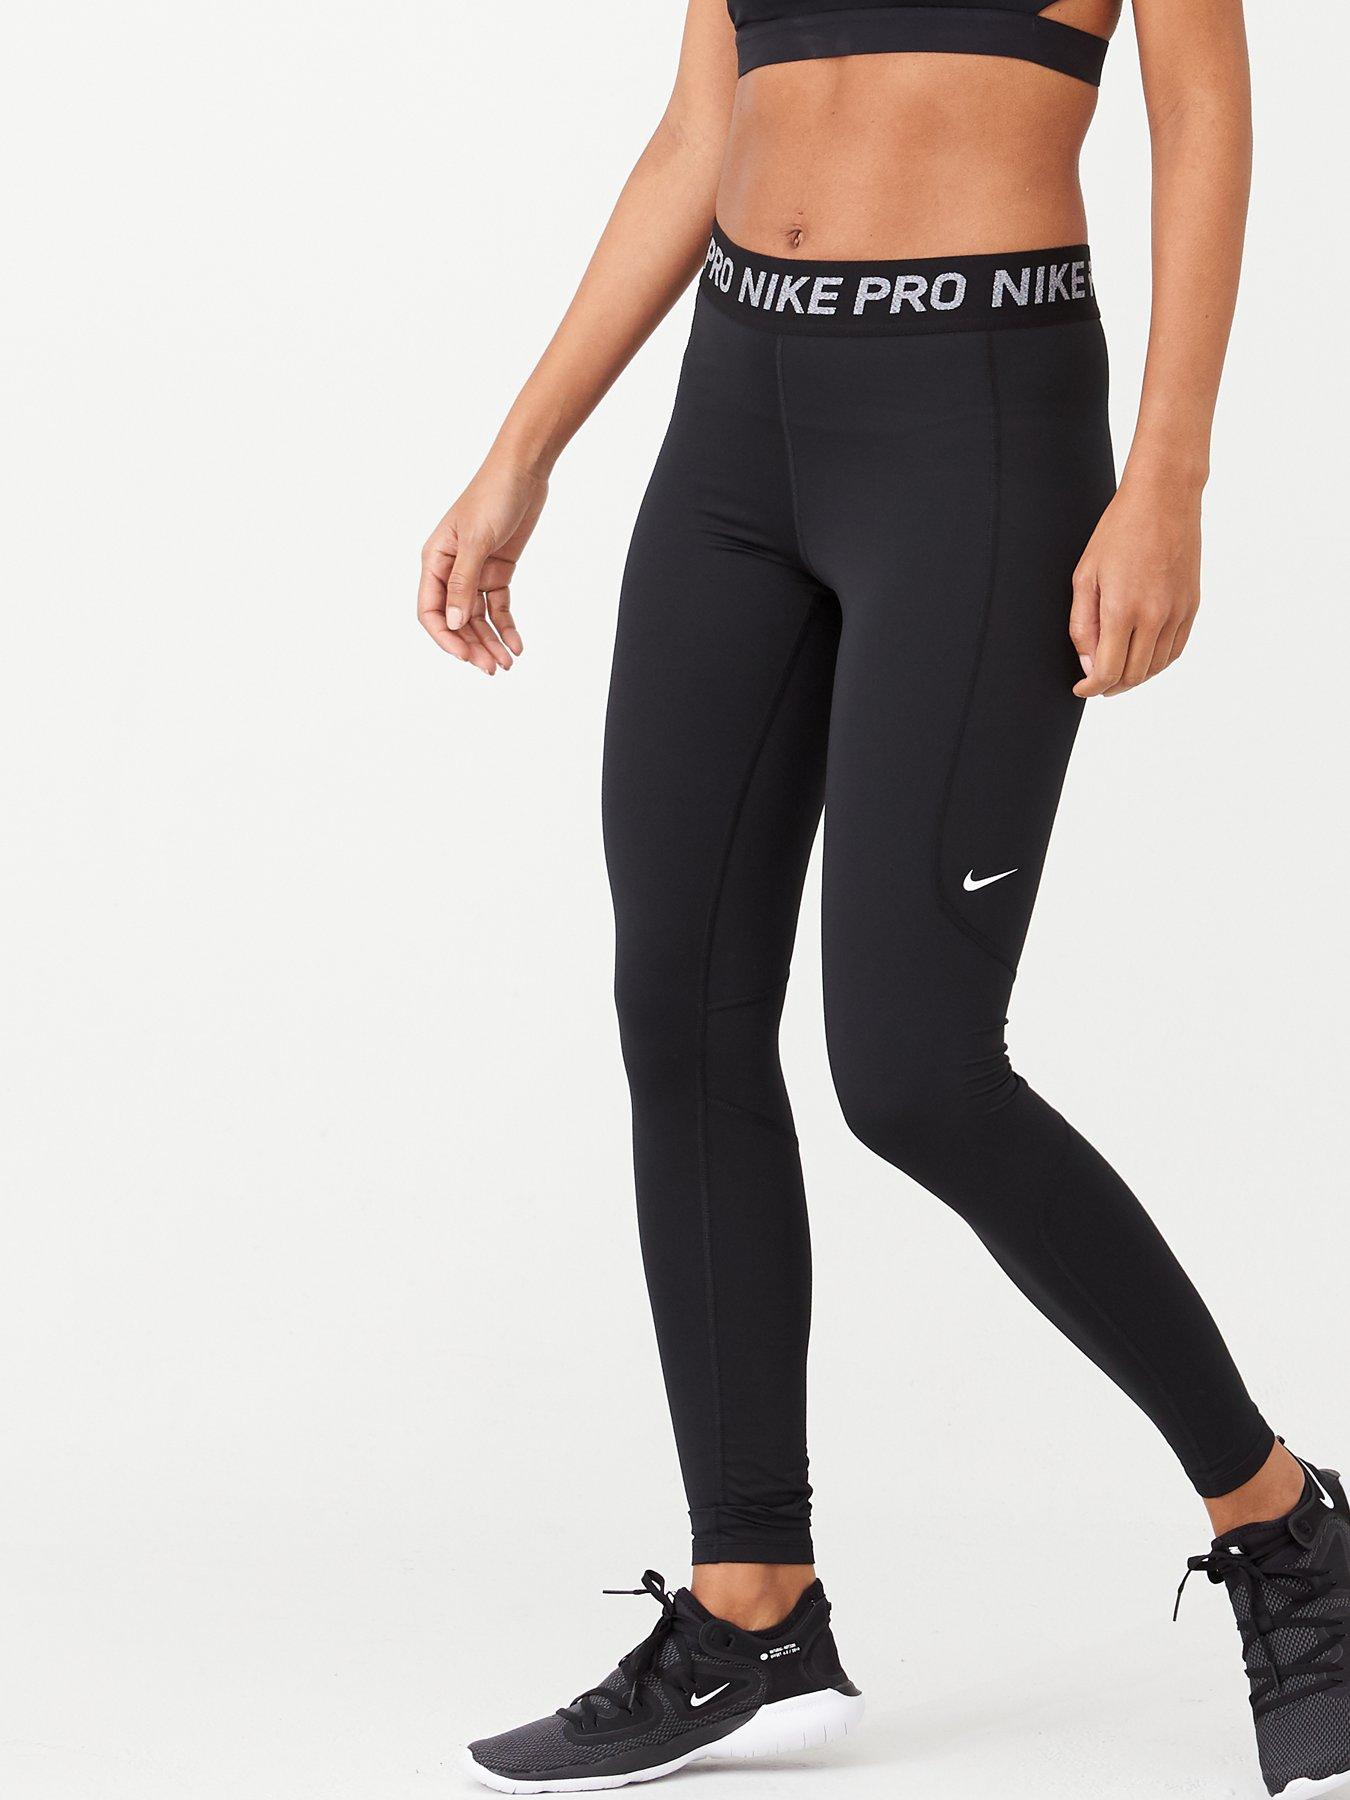 new nike pro leggings